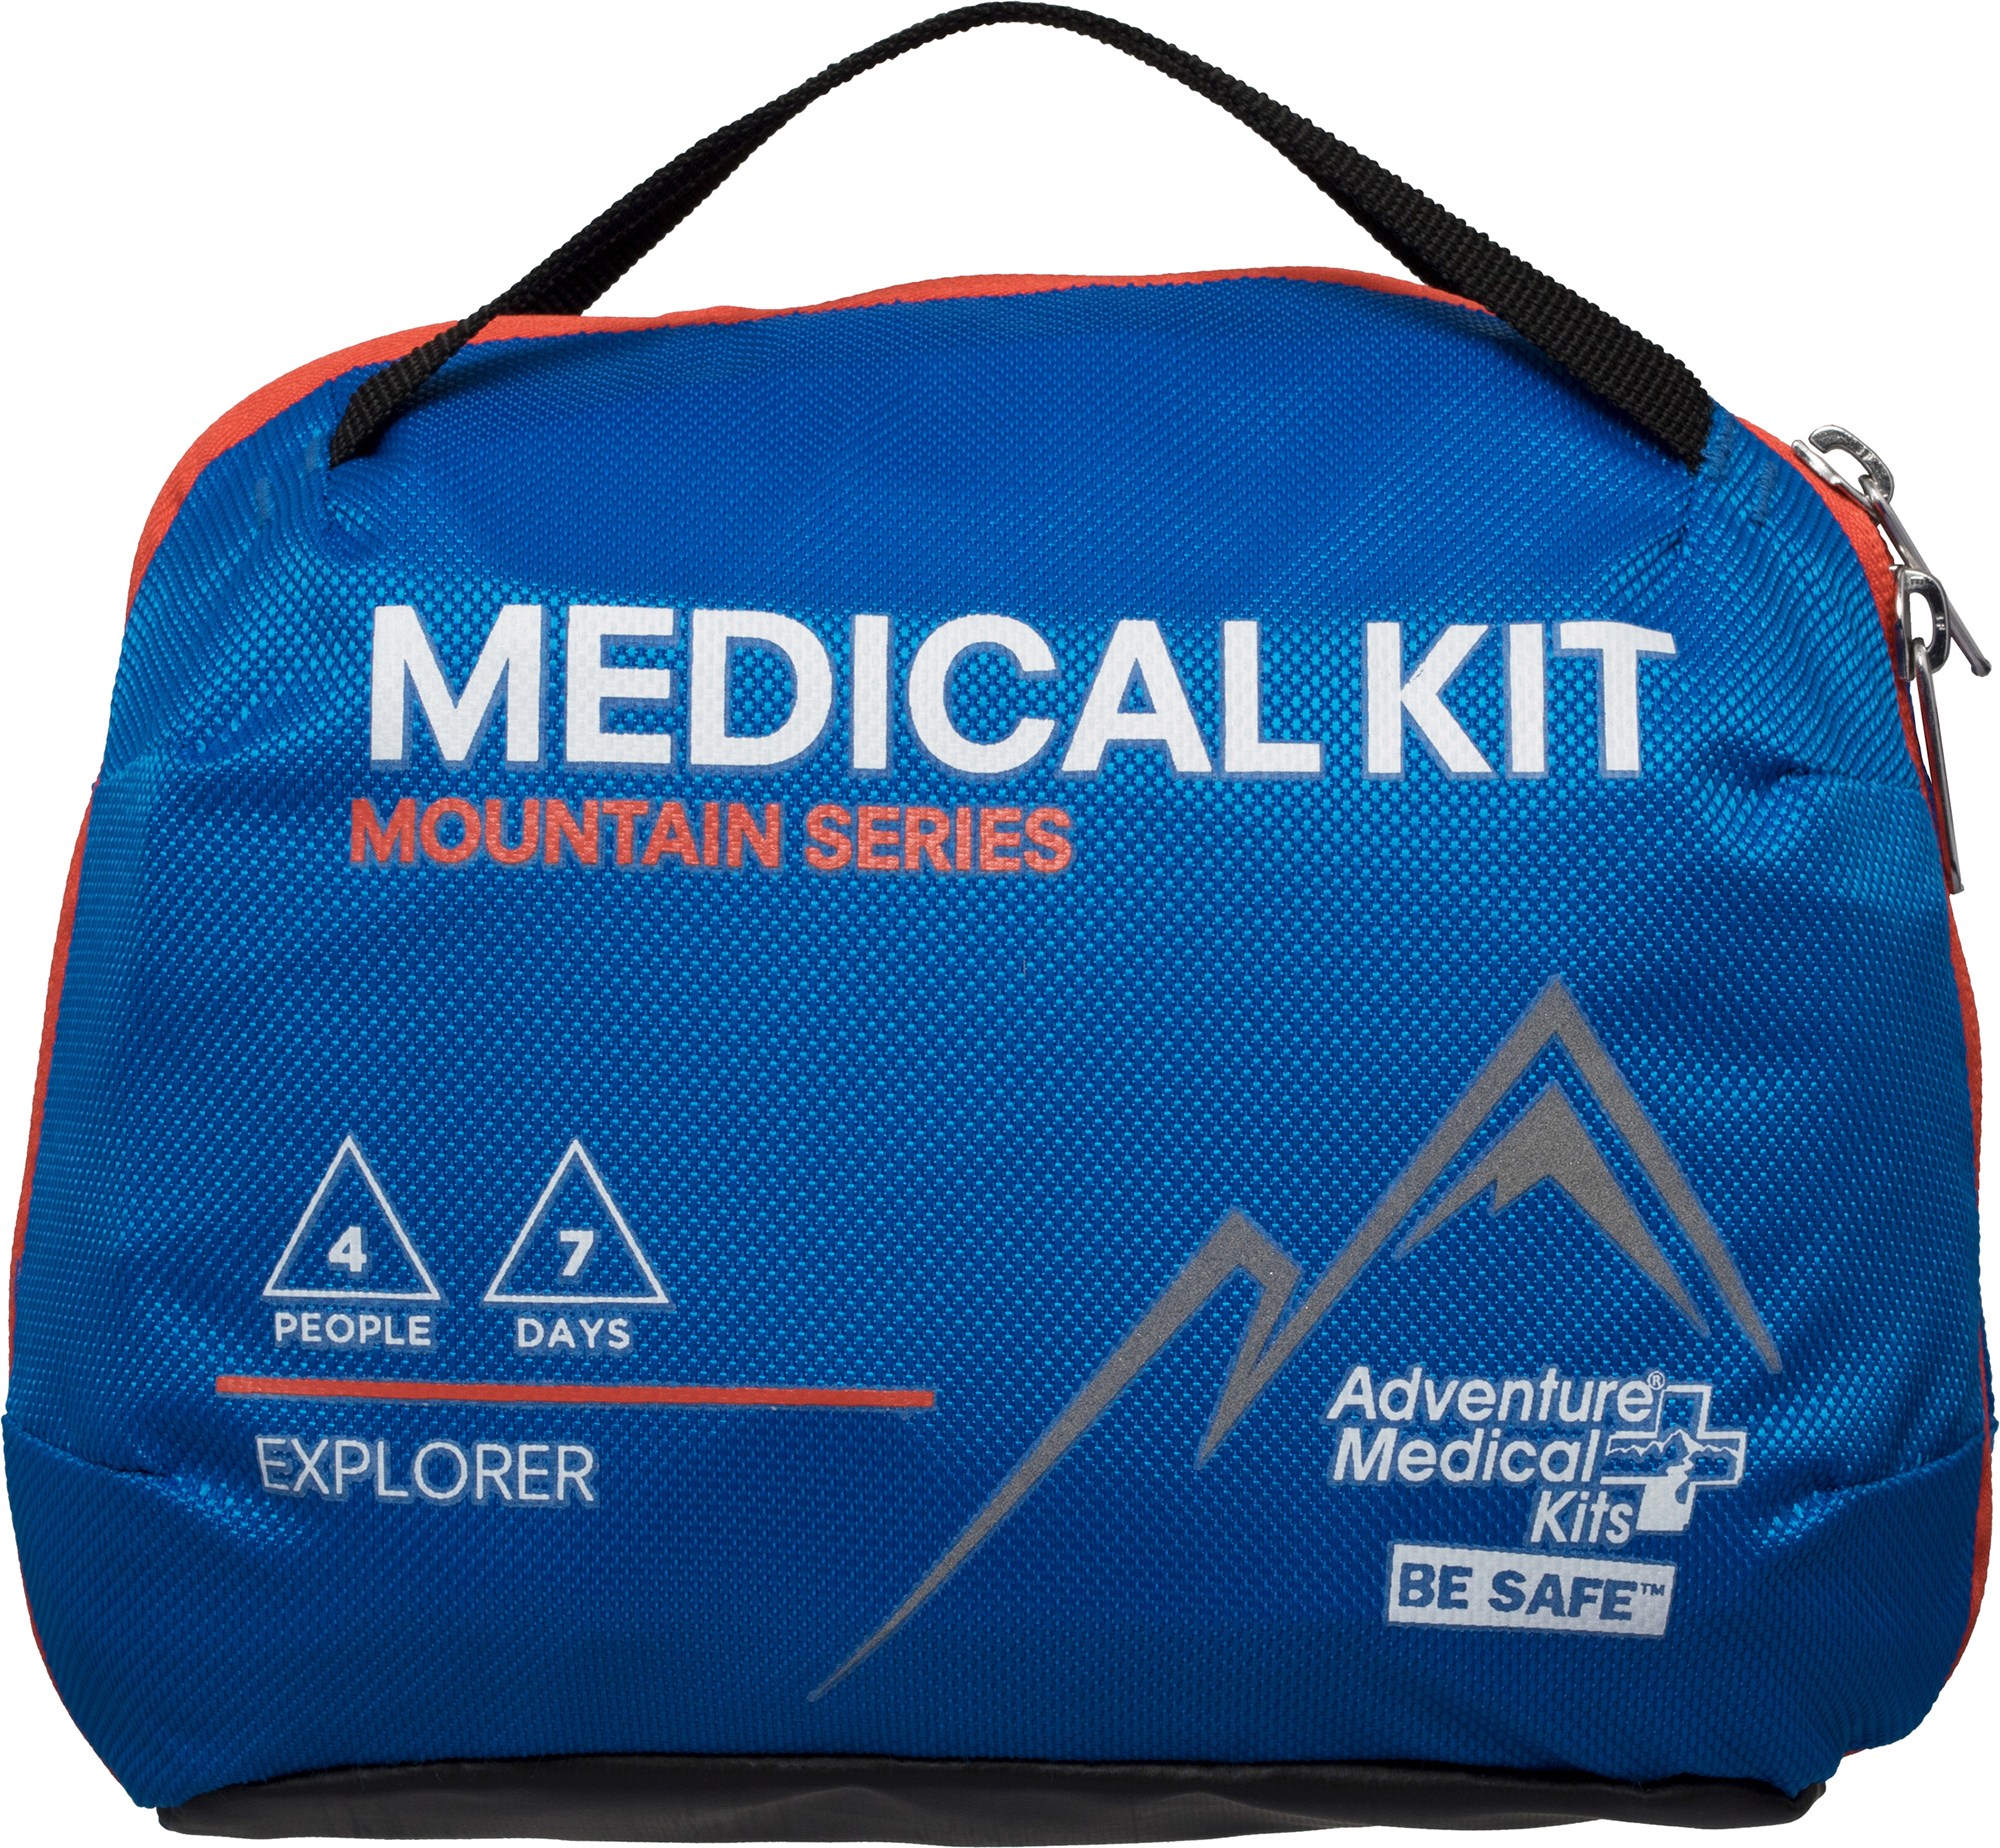 Медицинский набор Mountain Series Explorer Adventure Medical Kits, синий